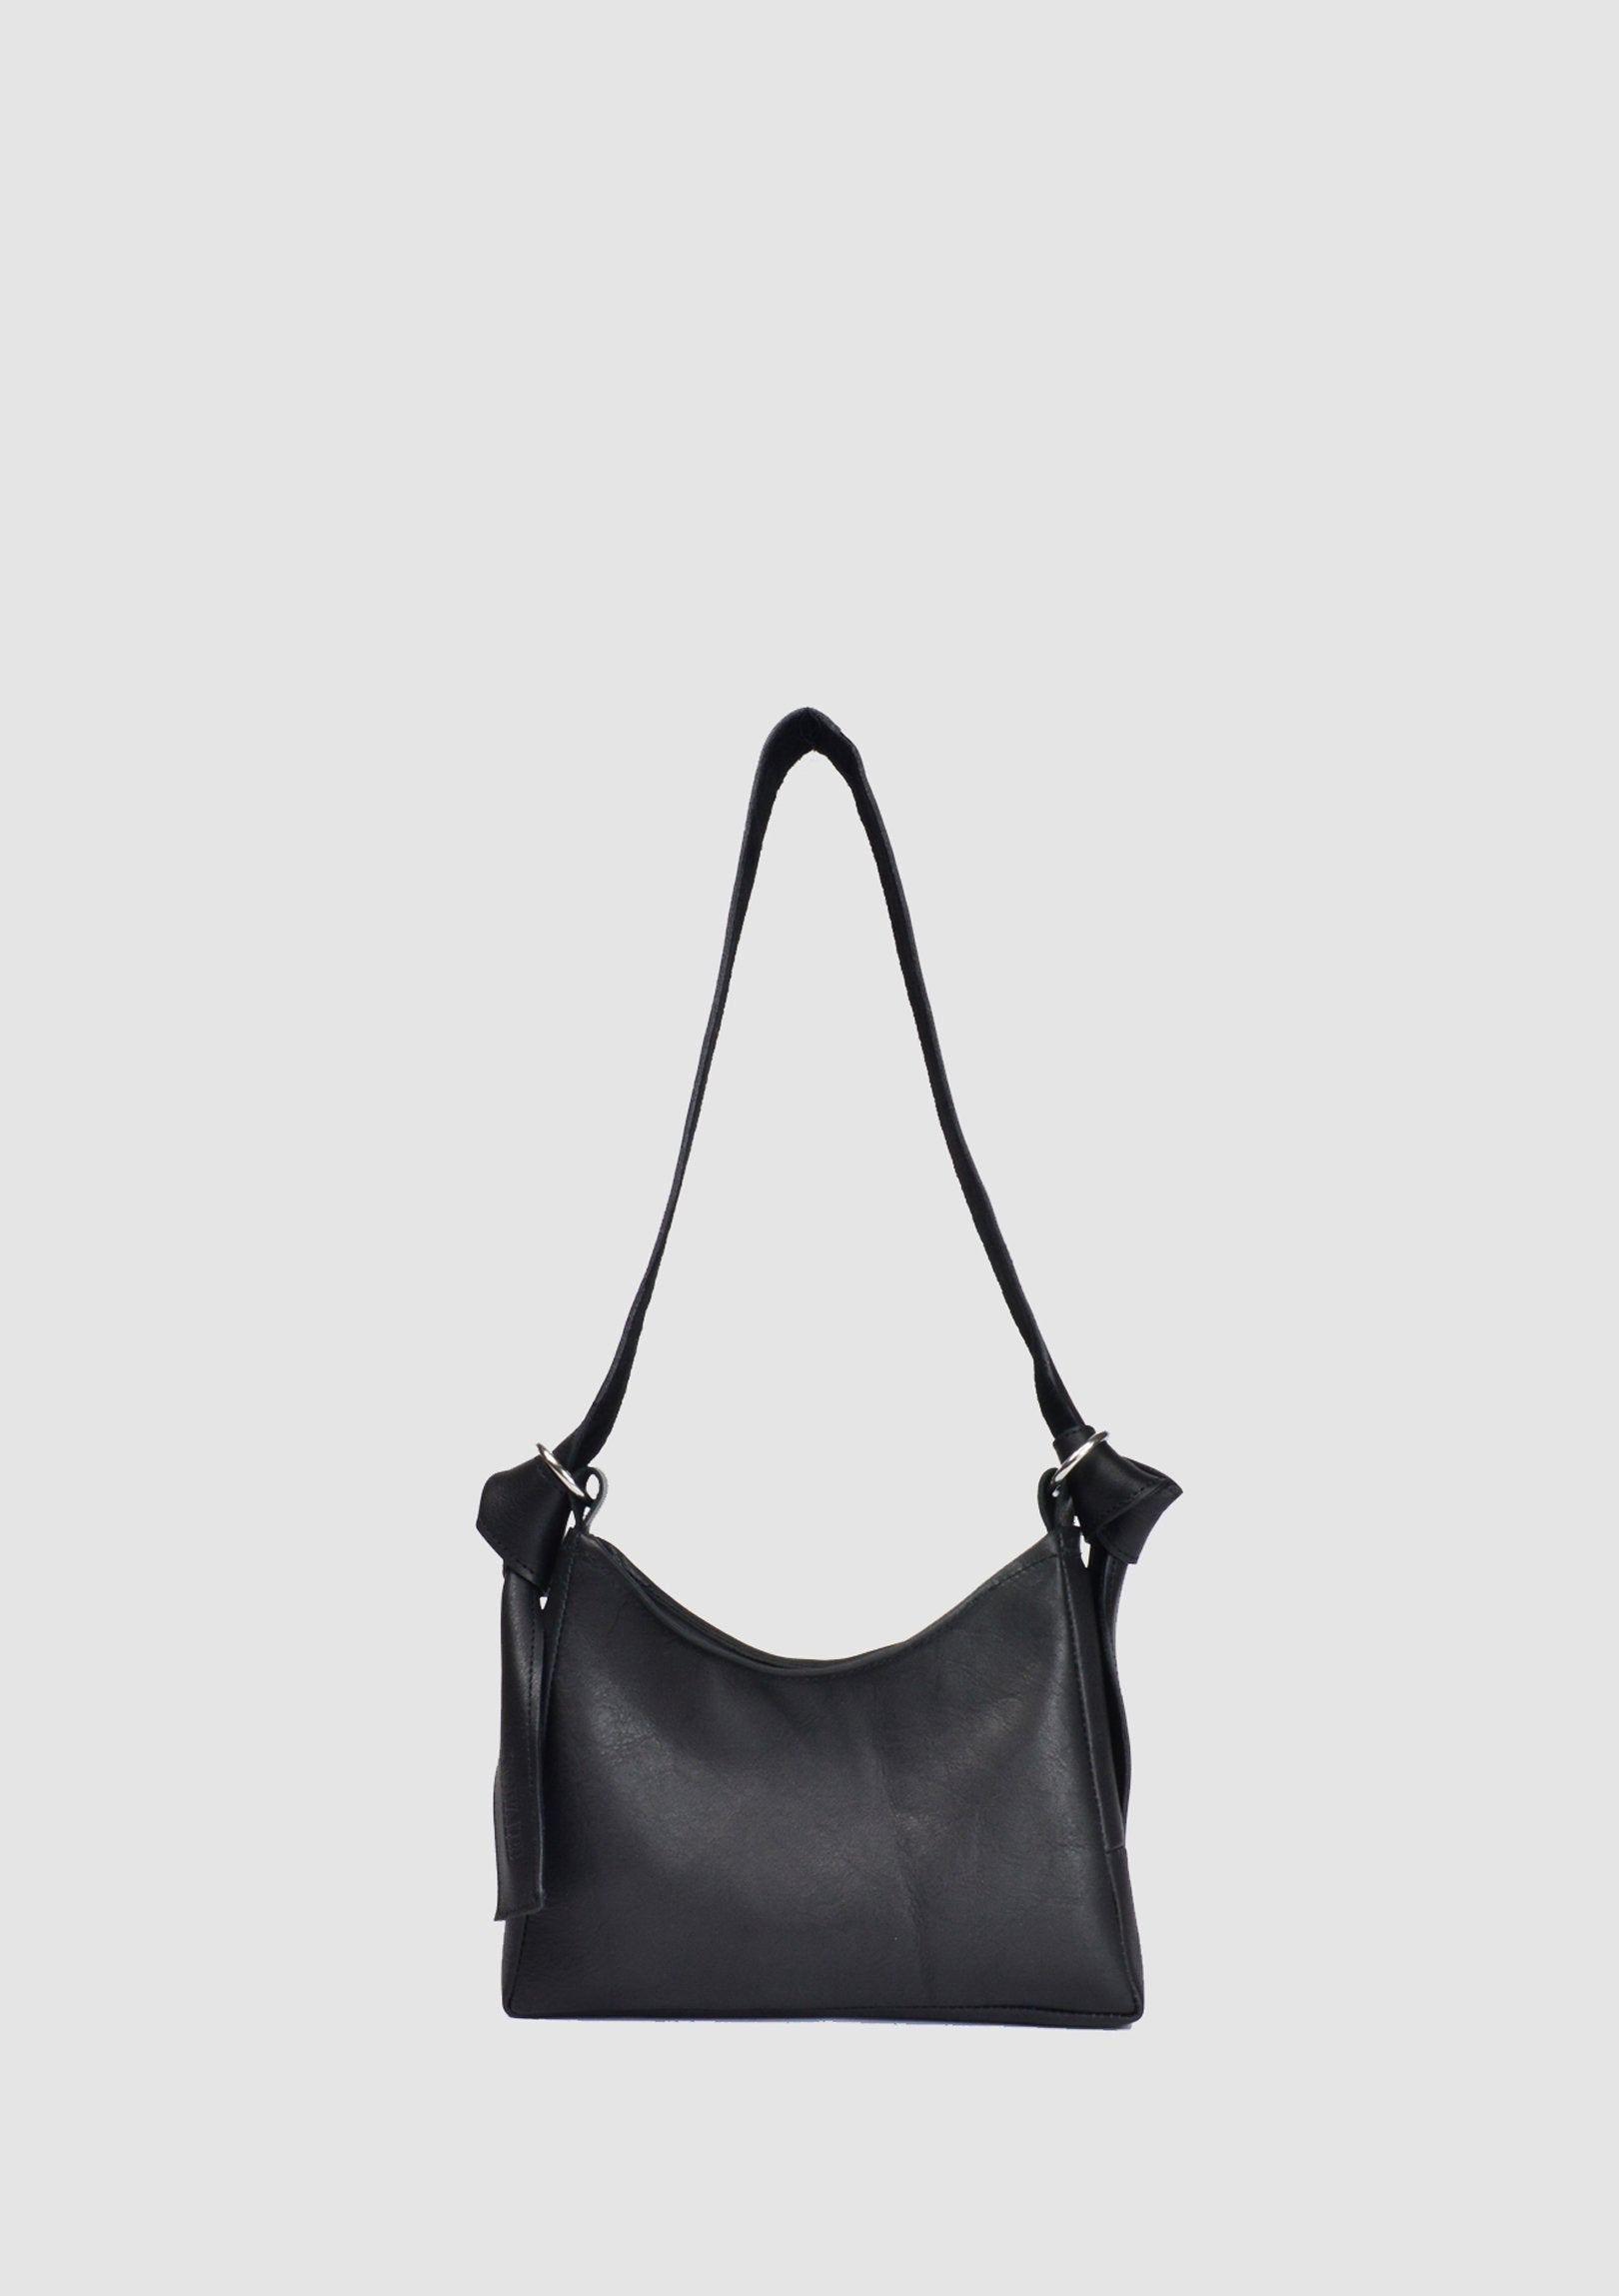 Women Purses and Handbags Tote Satchel Hobo and Wallet Set 6 PCS Gift Set Tote Black 